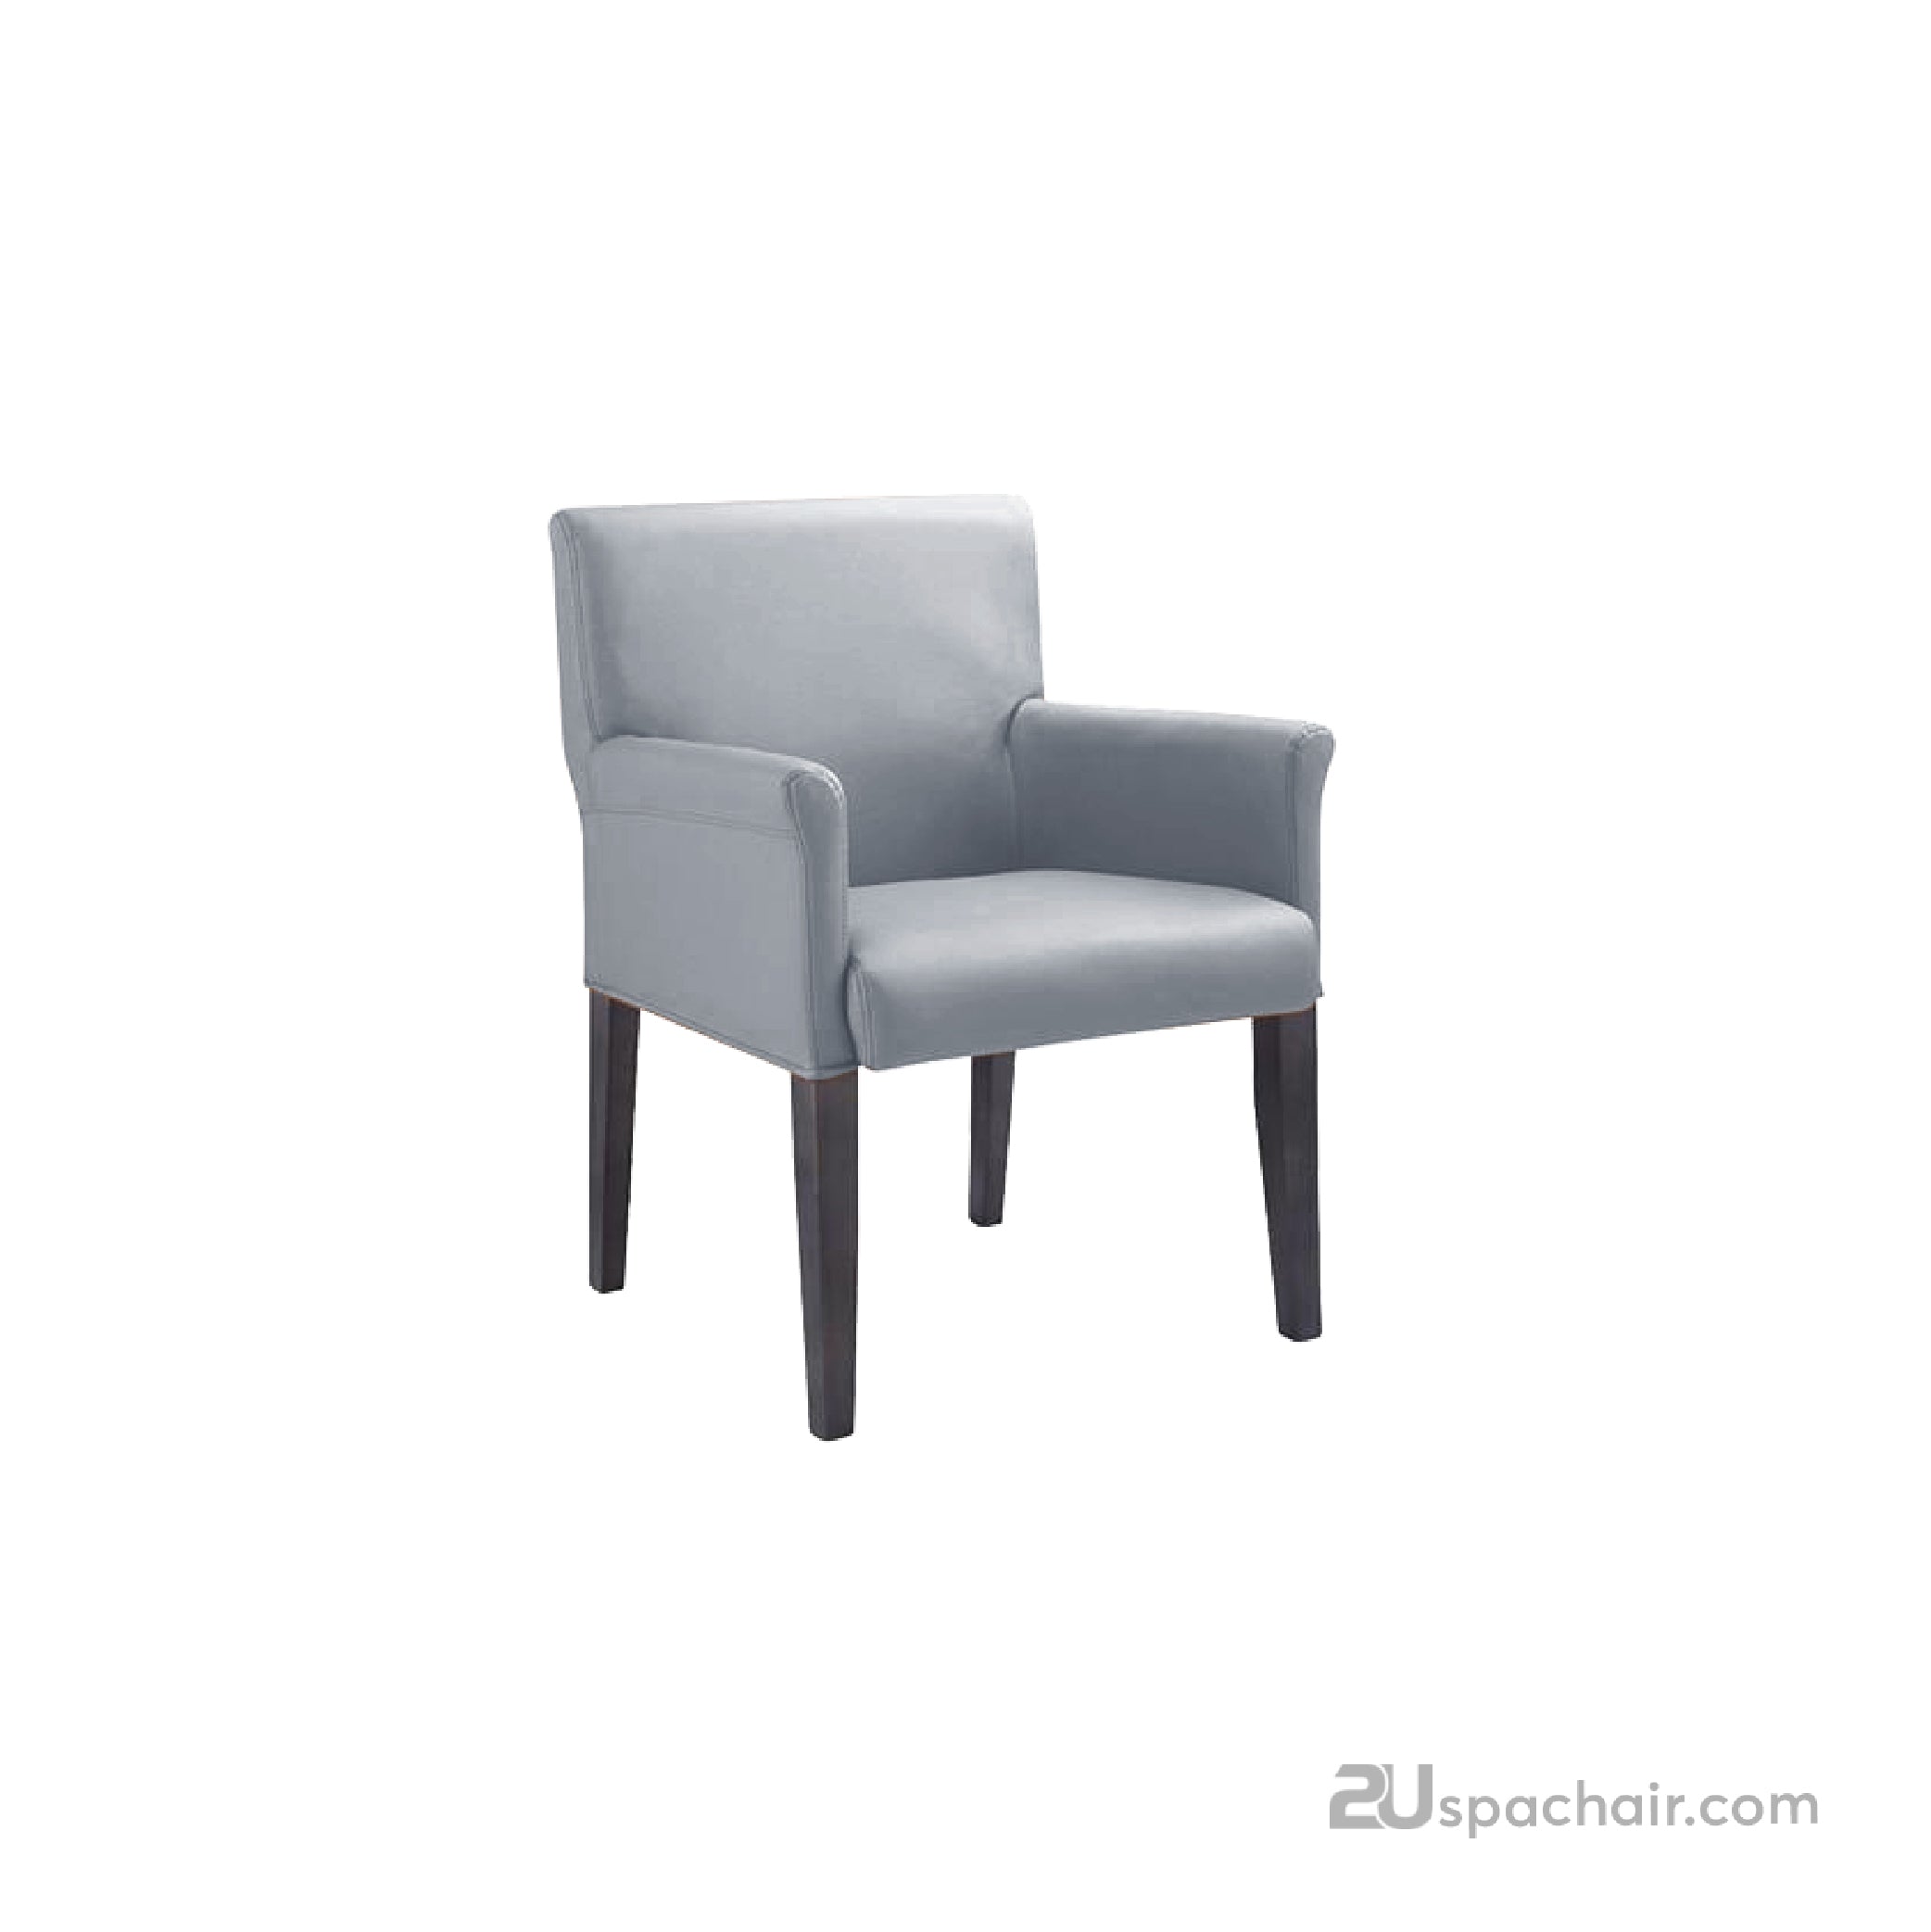 2U Spa Chair